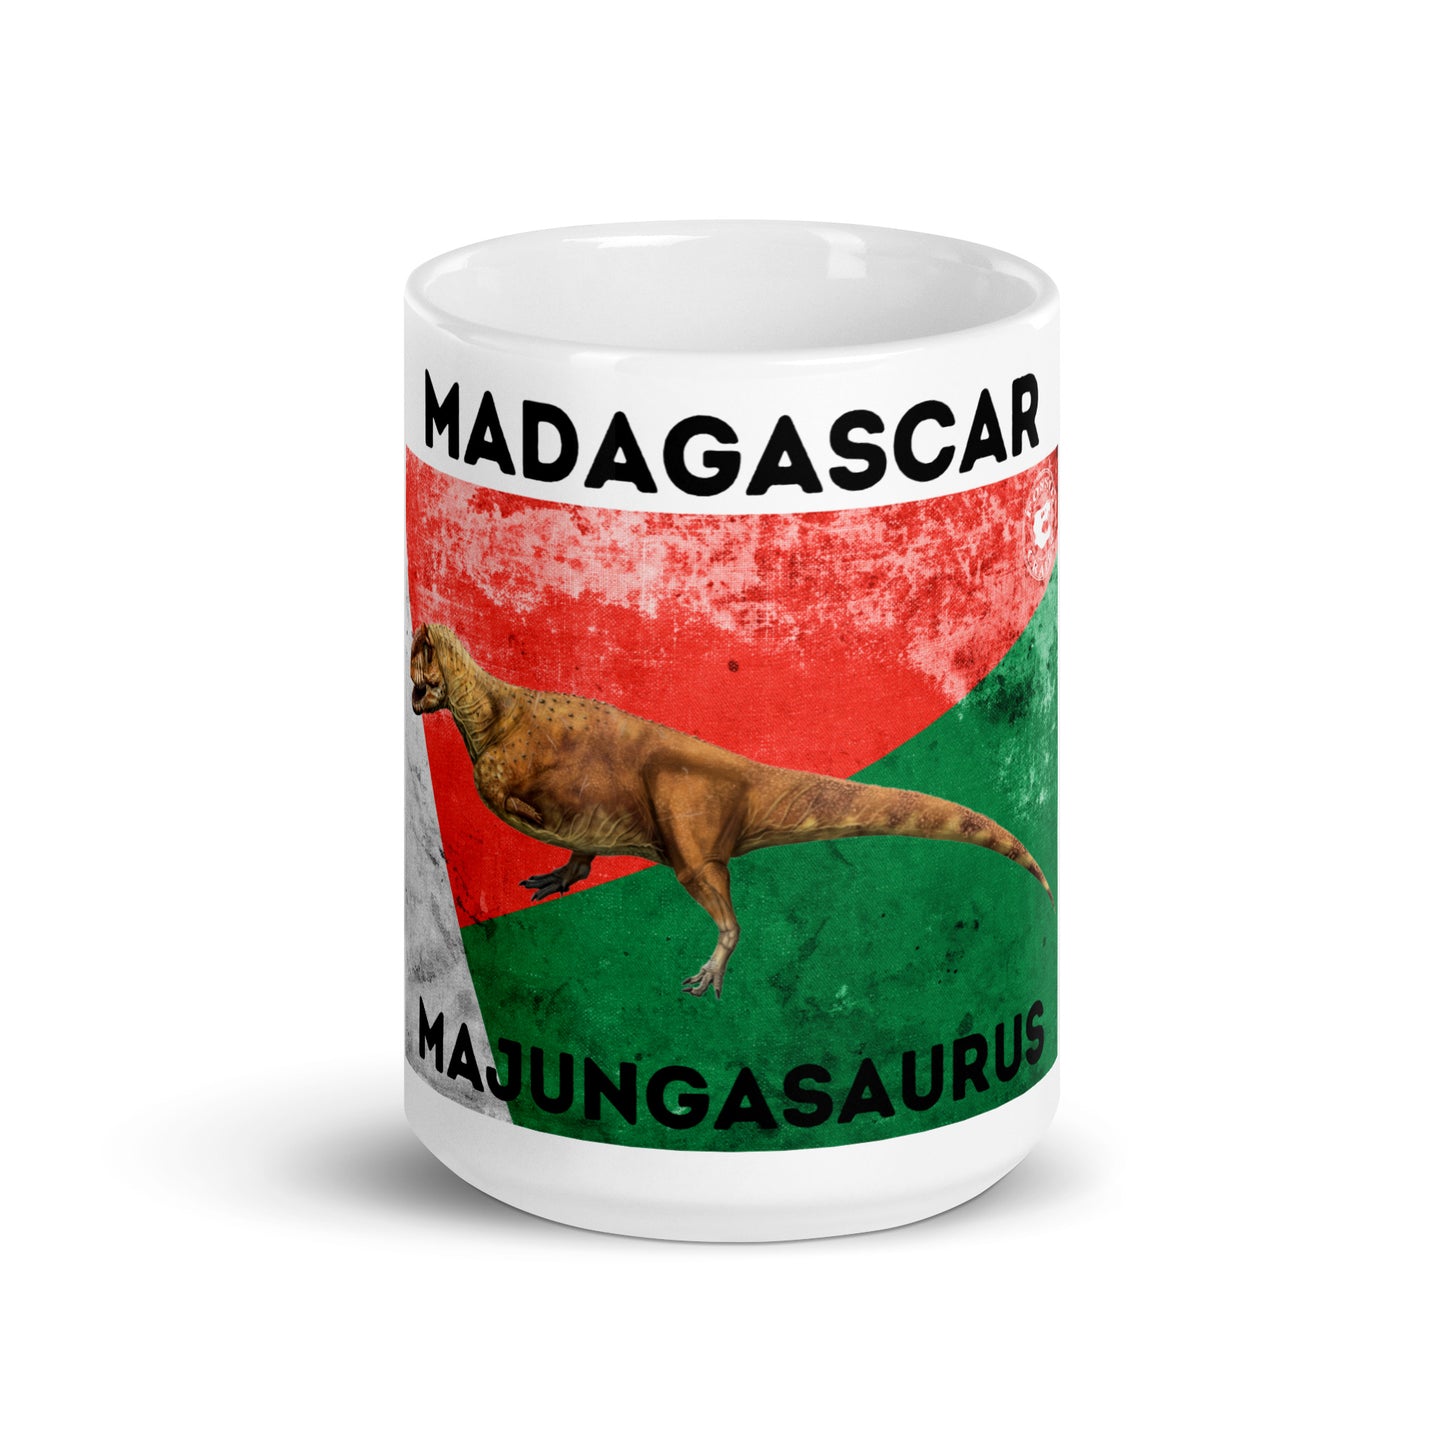 Madagascar Majungasaurus Glossy Mug